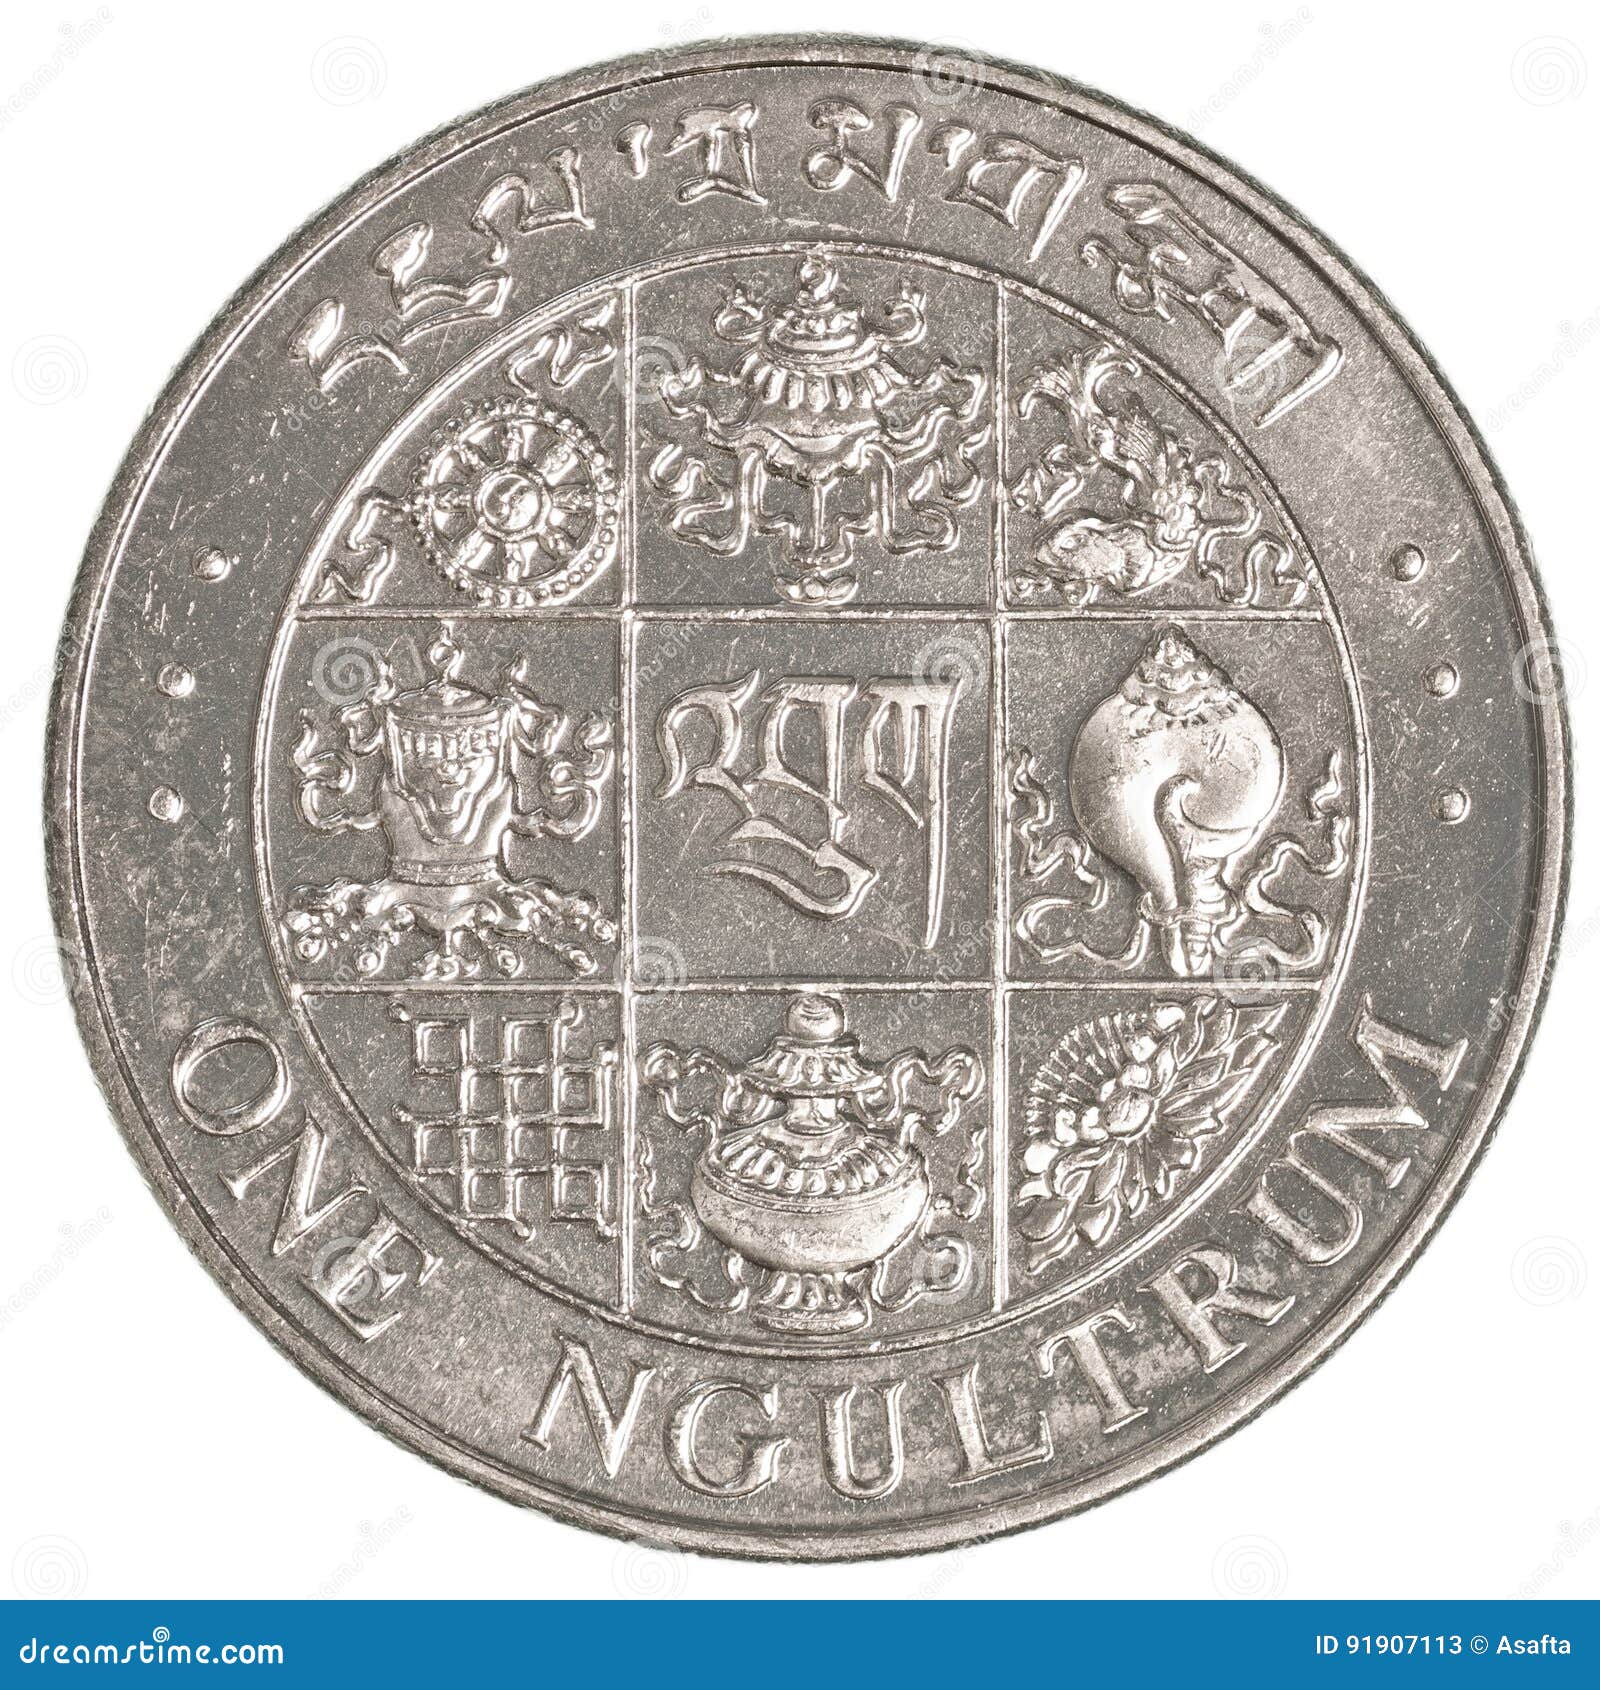 one bhutanese ngultrum coin